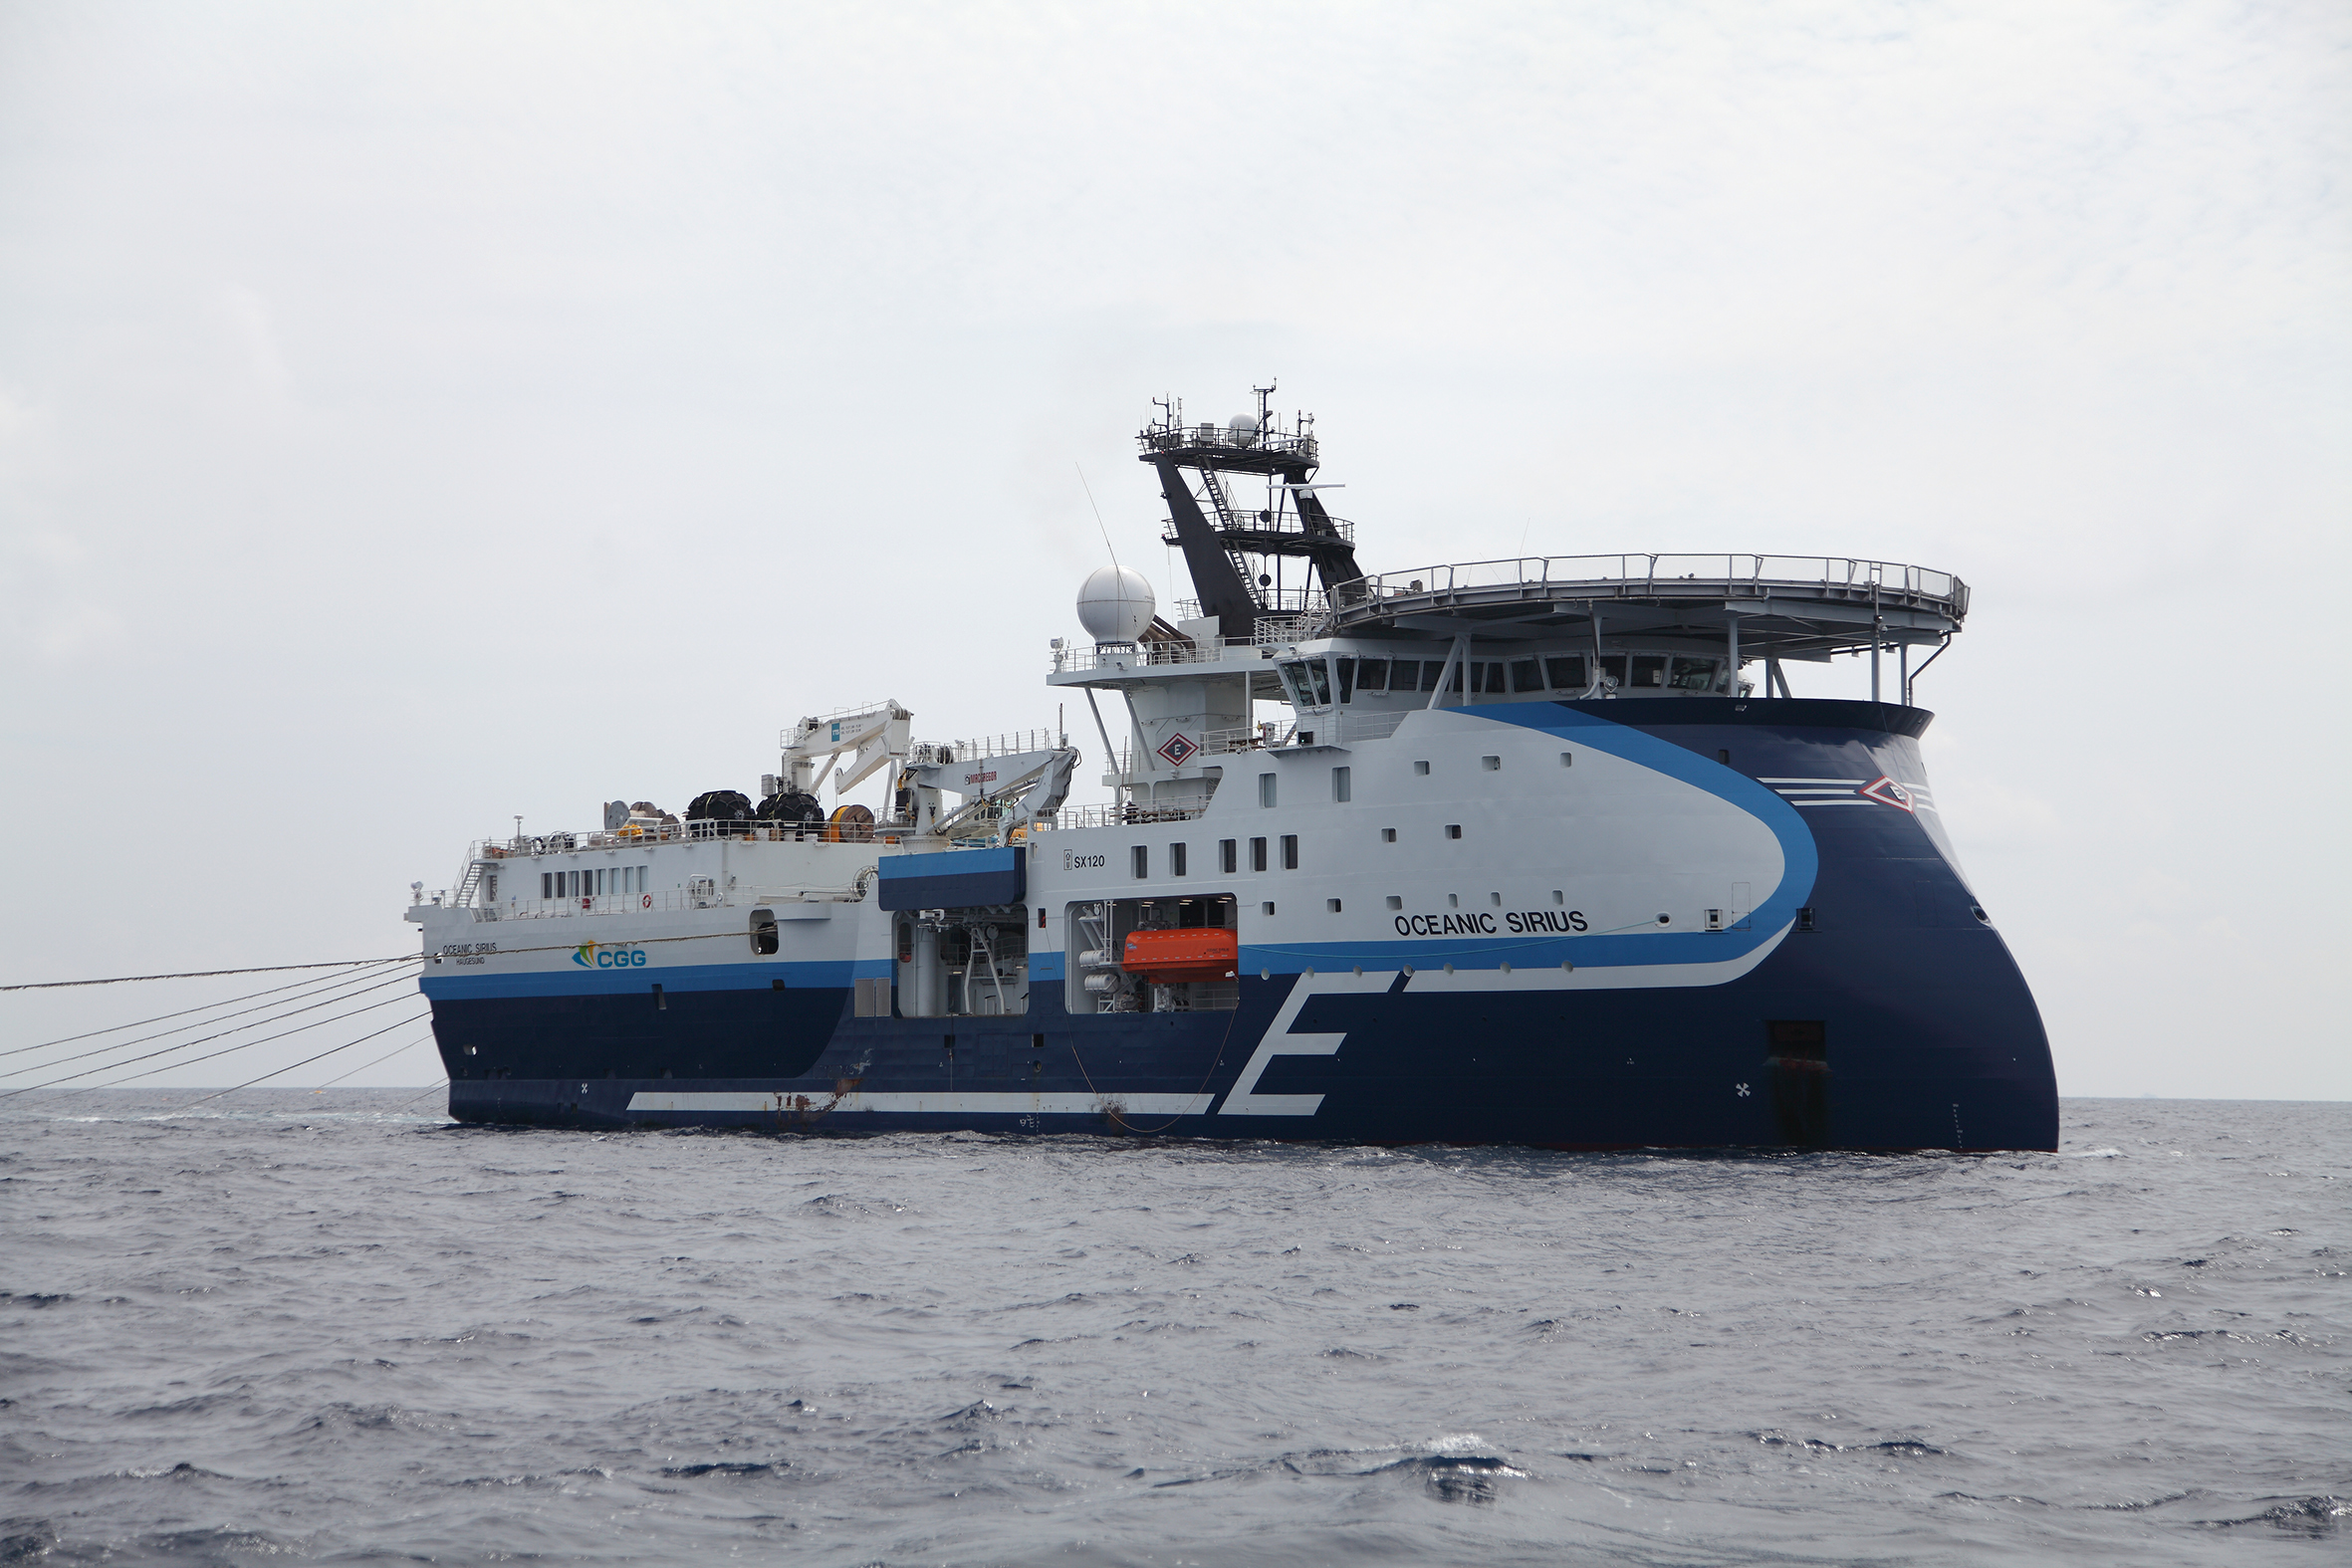 CGG's Oceanic Sirius vessel